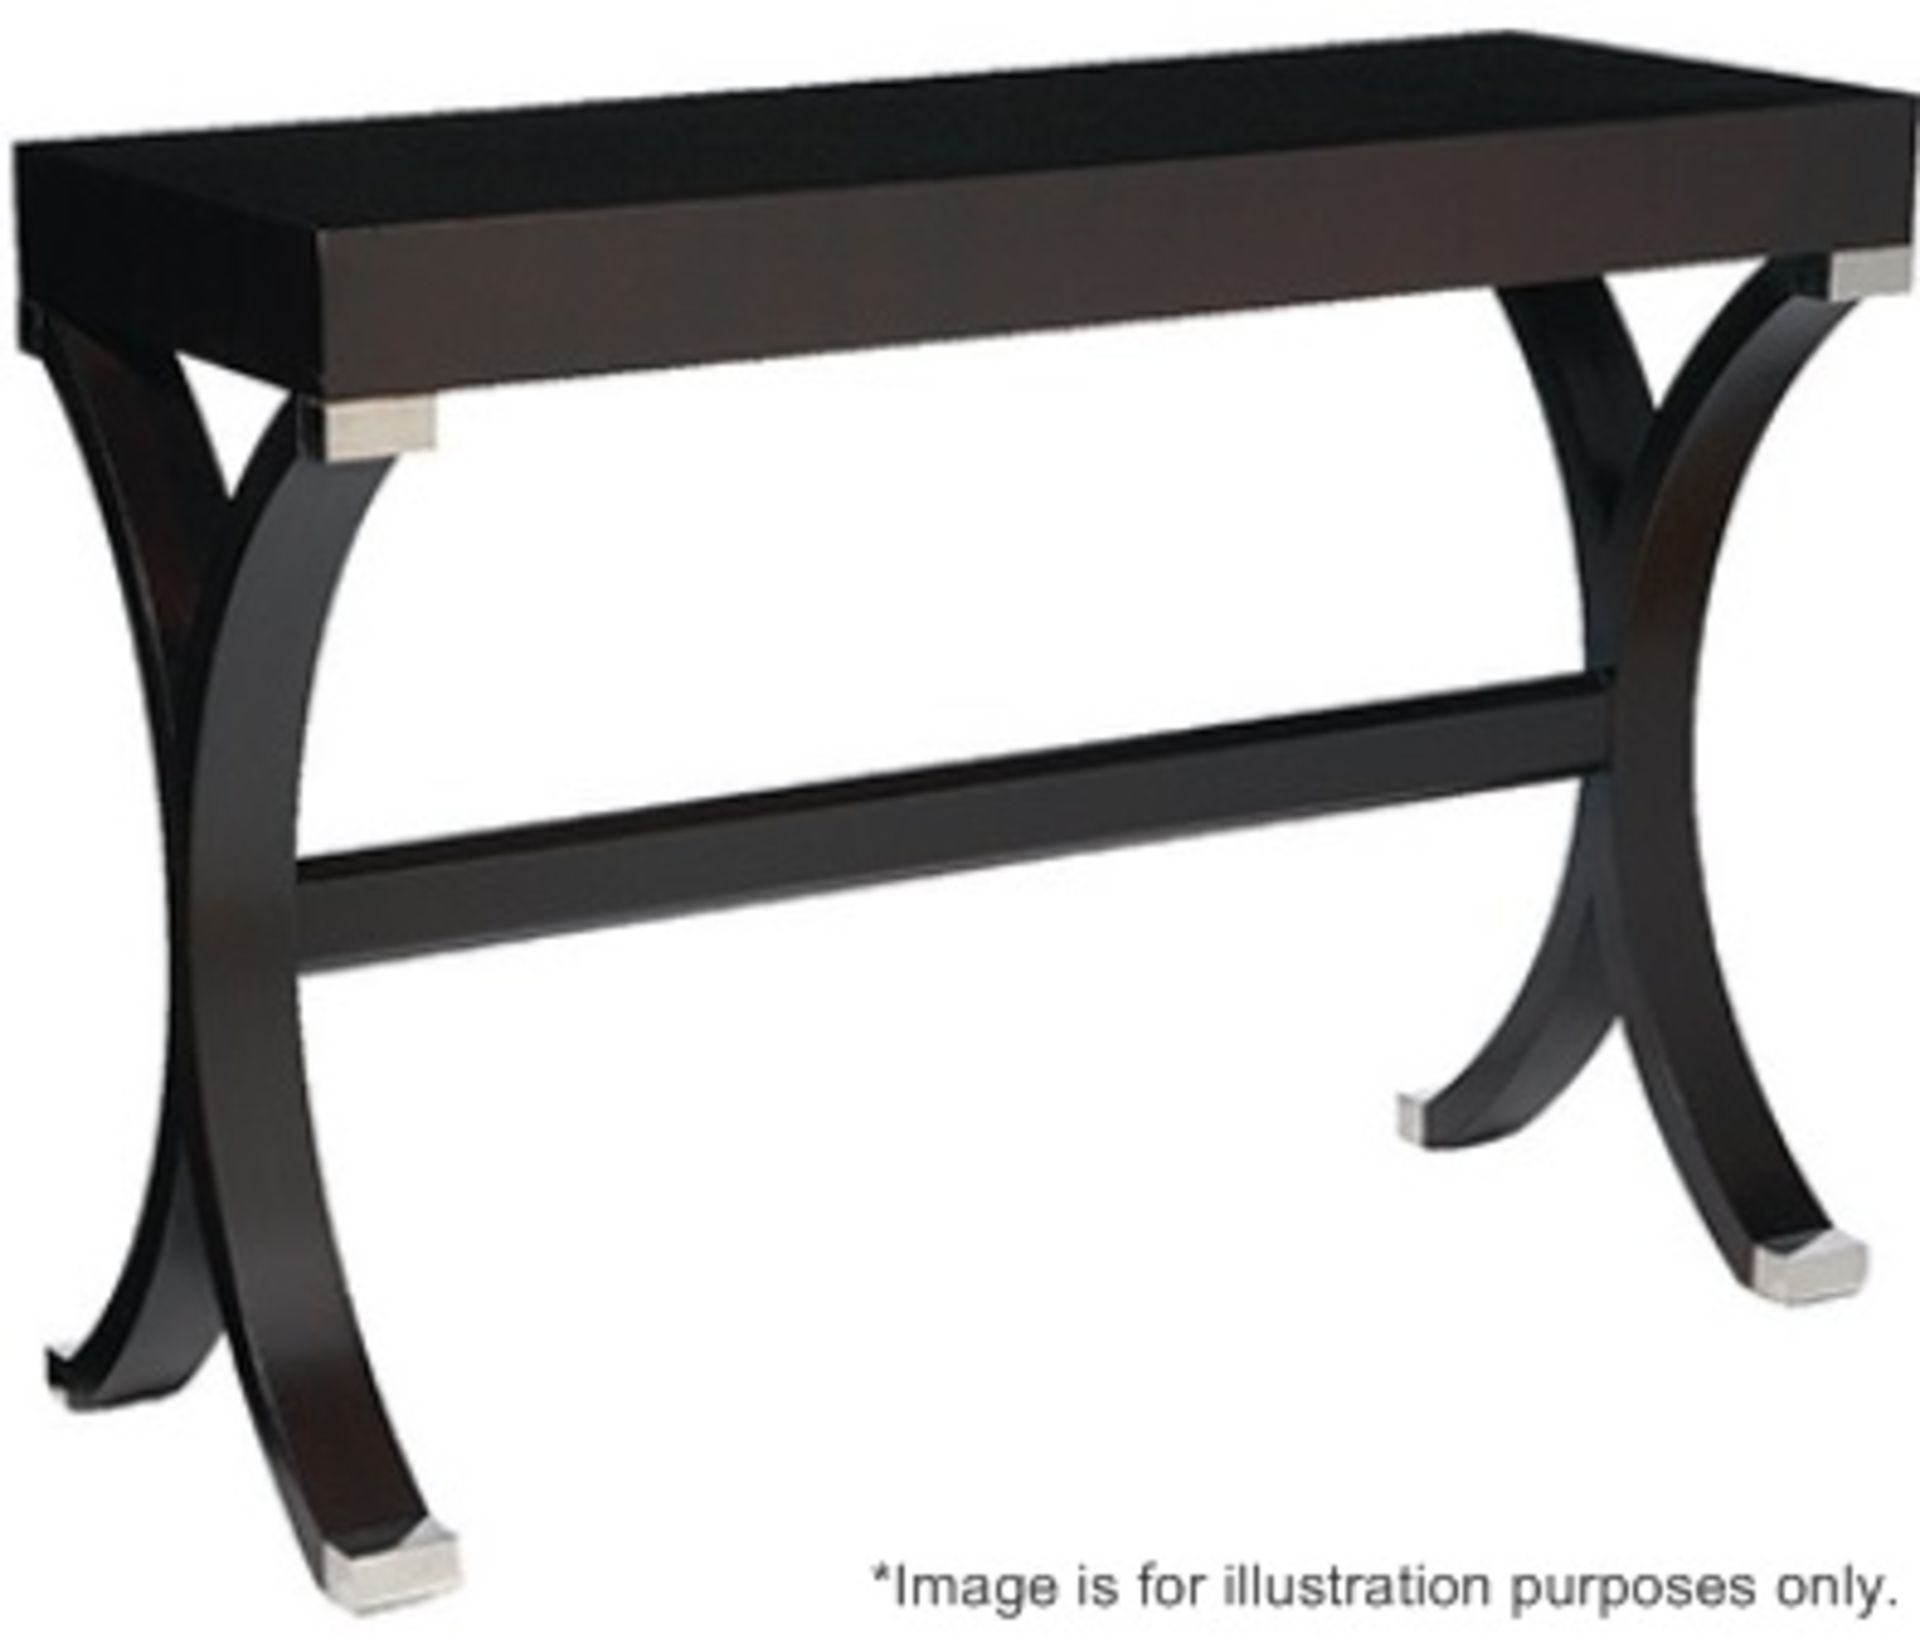 1 x JUSTIN VAN BREDA 'LULU' Designer Mahogany Console Table With Drawer - Original Price £1,949.00 - Image 2 of 11